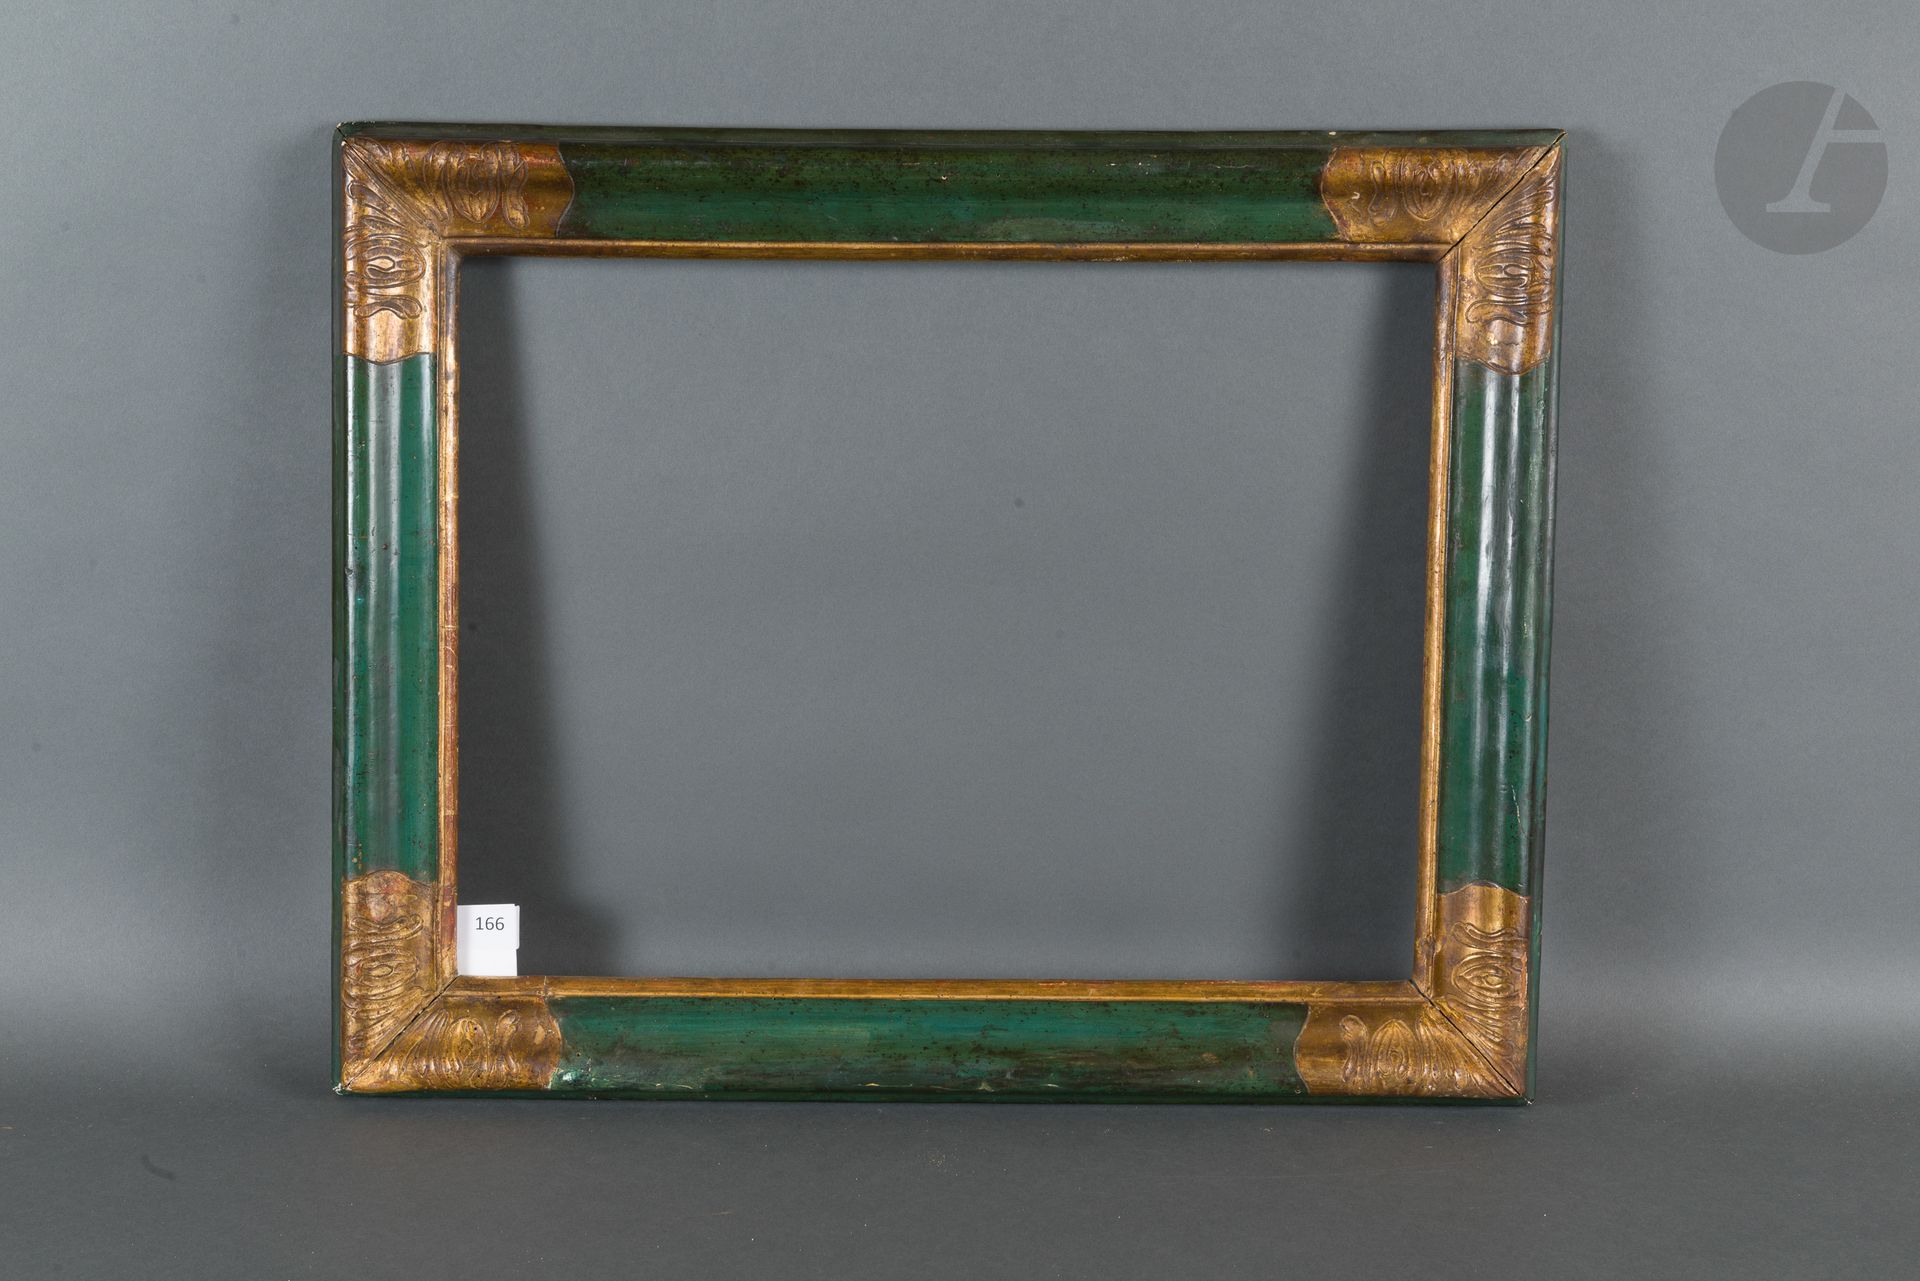 Null 木质框架，模制并涂以绿色，四角镀金，有刺桐叶装饰。普罗旺斯，18世纪初（在尺寸上有所修改）。
35 x 46,8 cm - 外形 : 6,1 cm